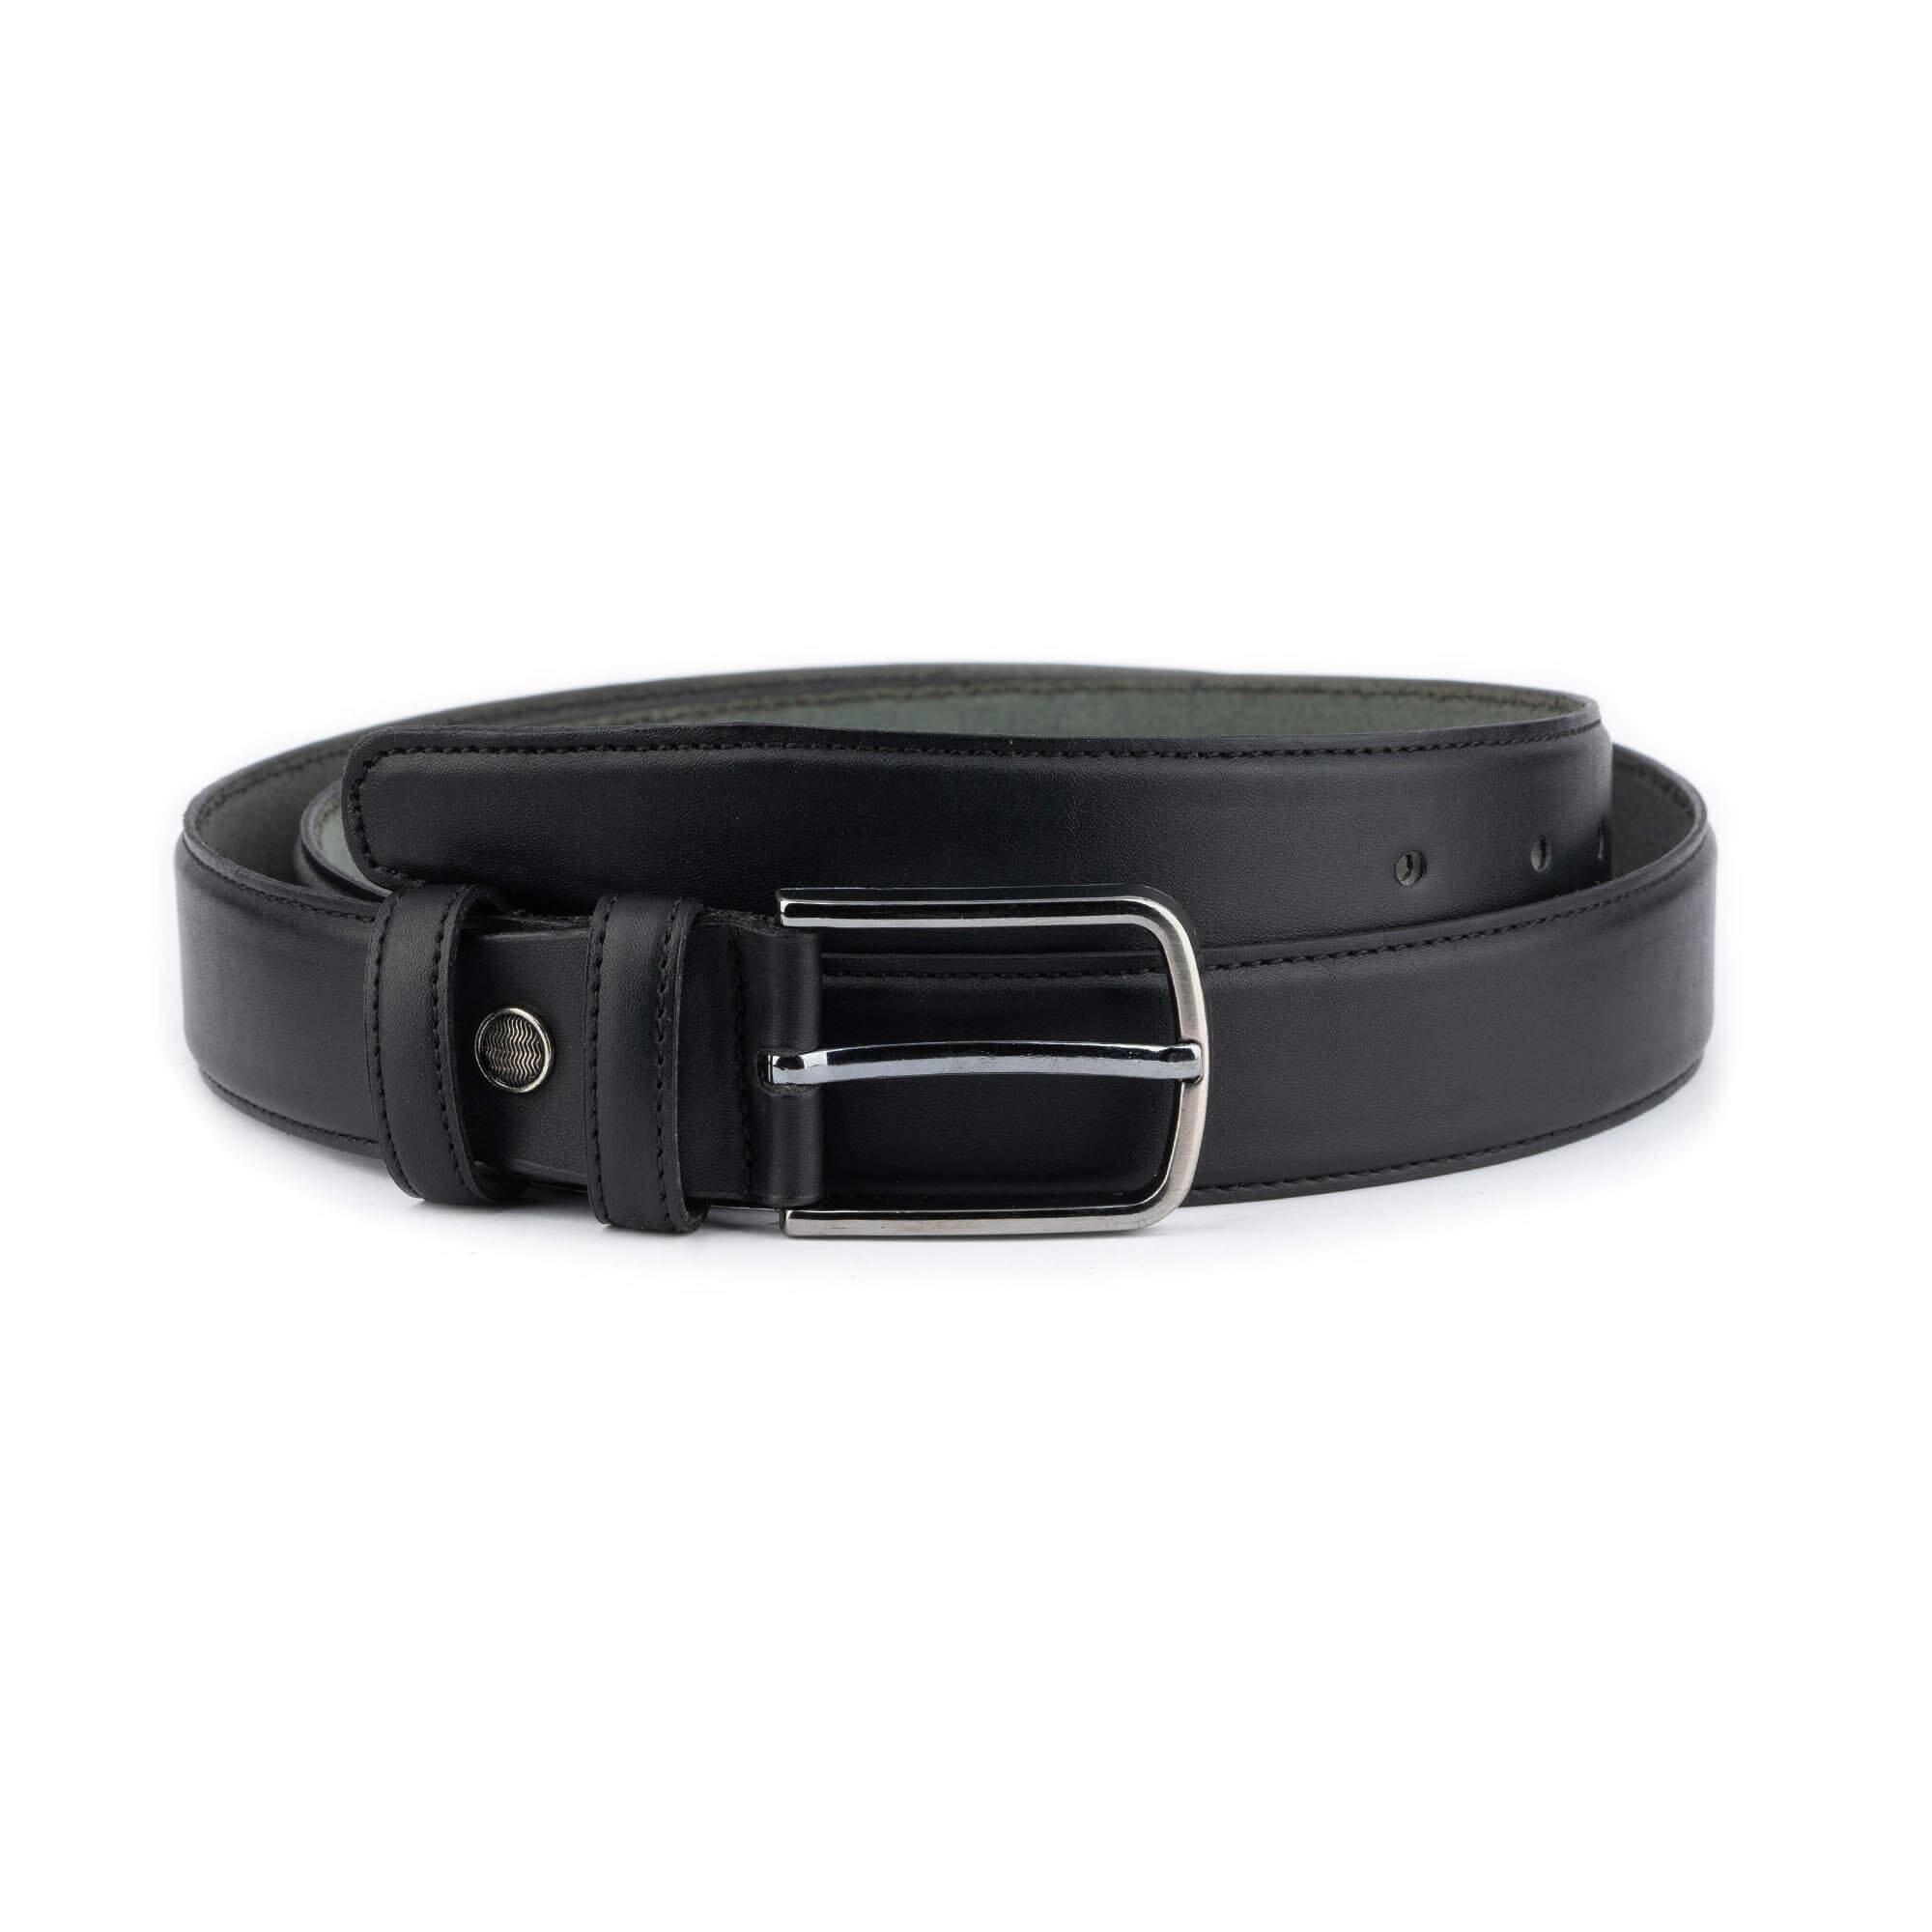 Buy Mens Black Leather Belt For Trousers - LeatherBeltsOnline.com